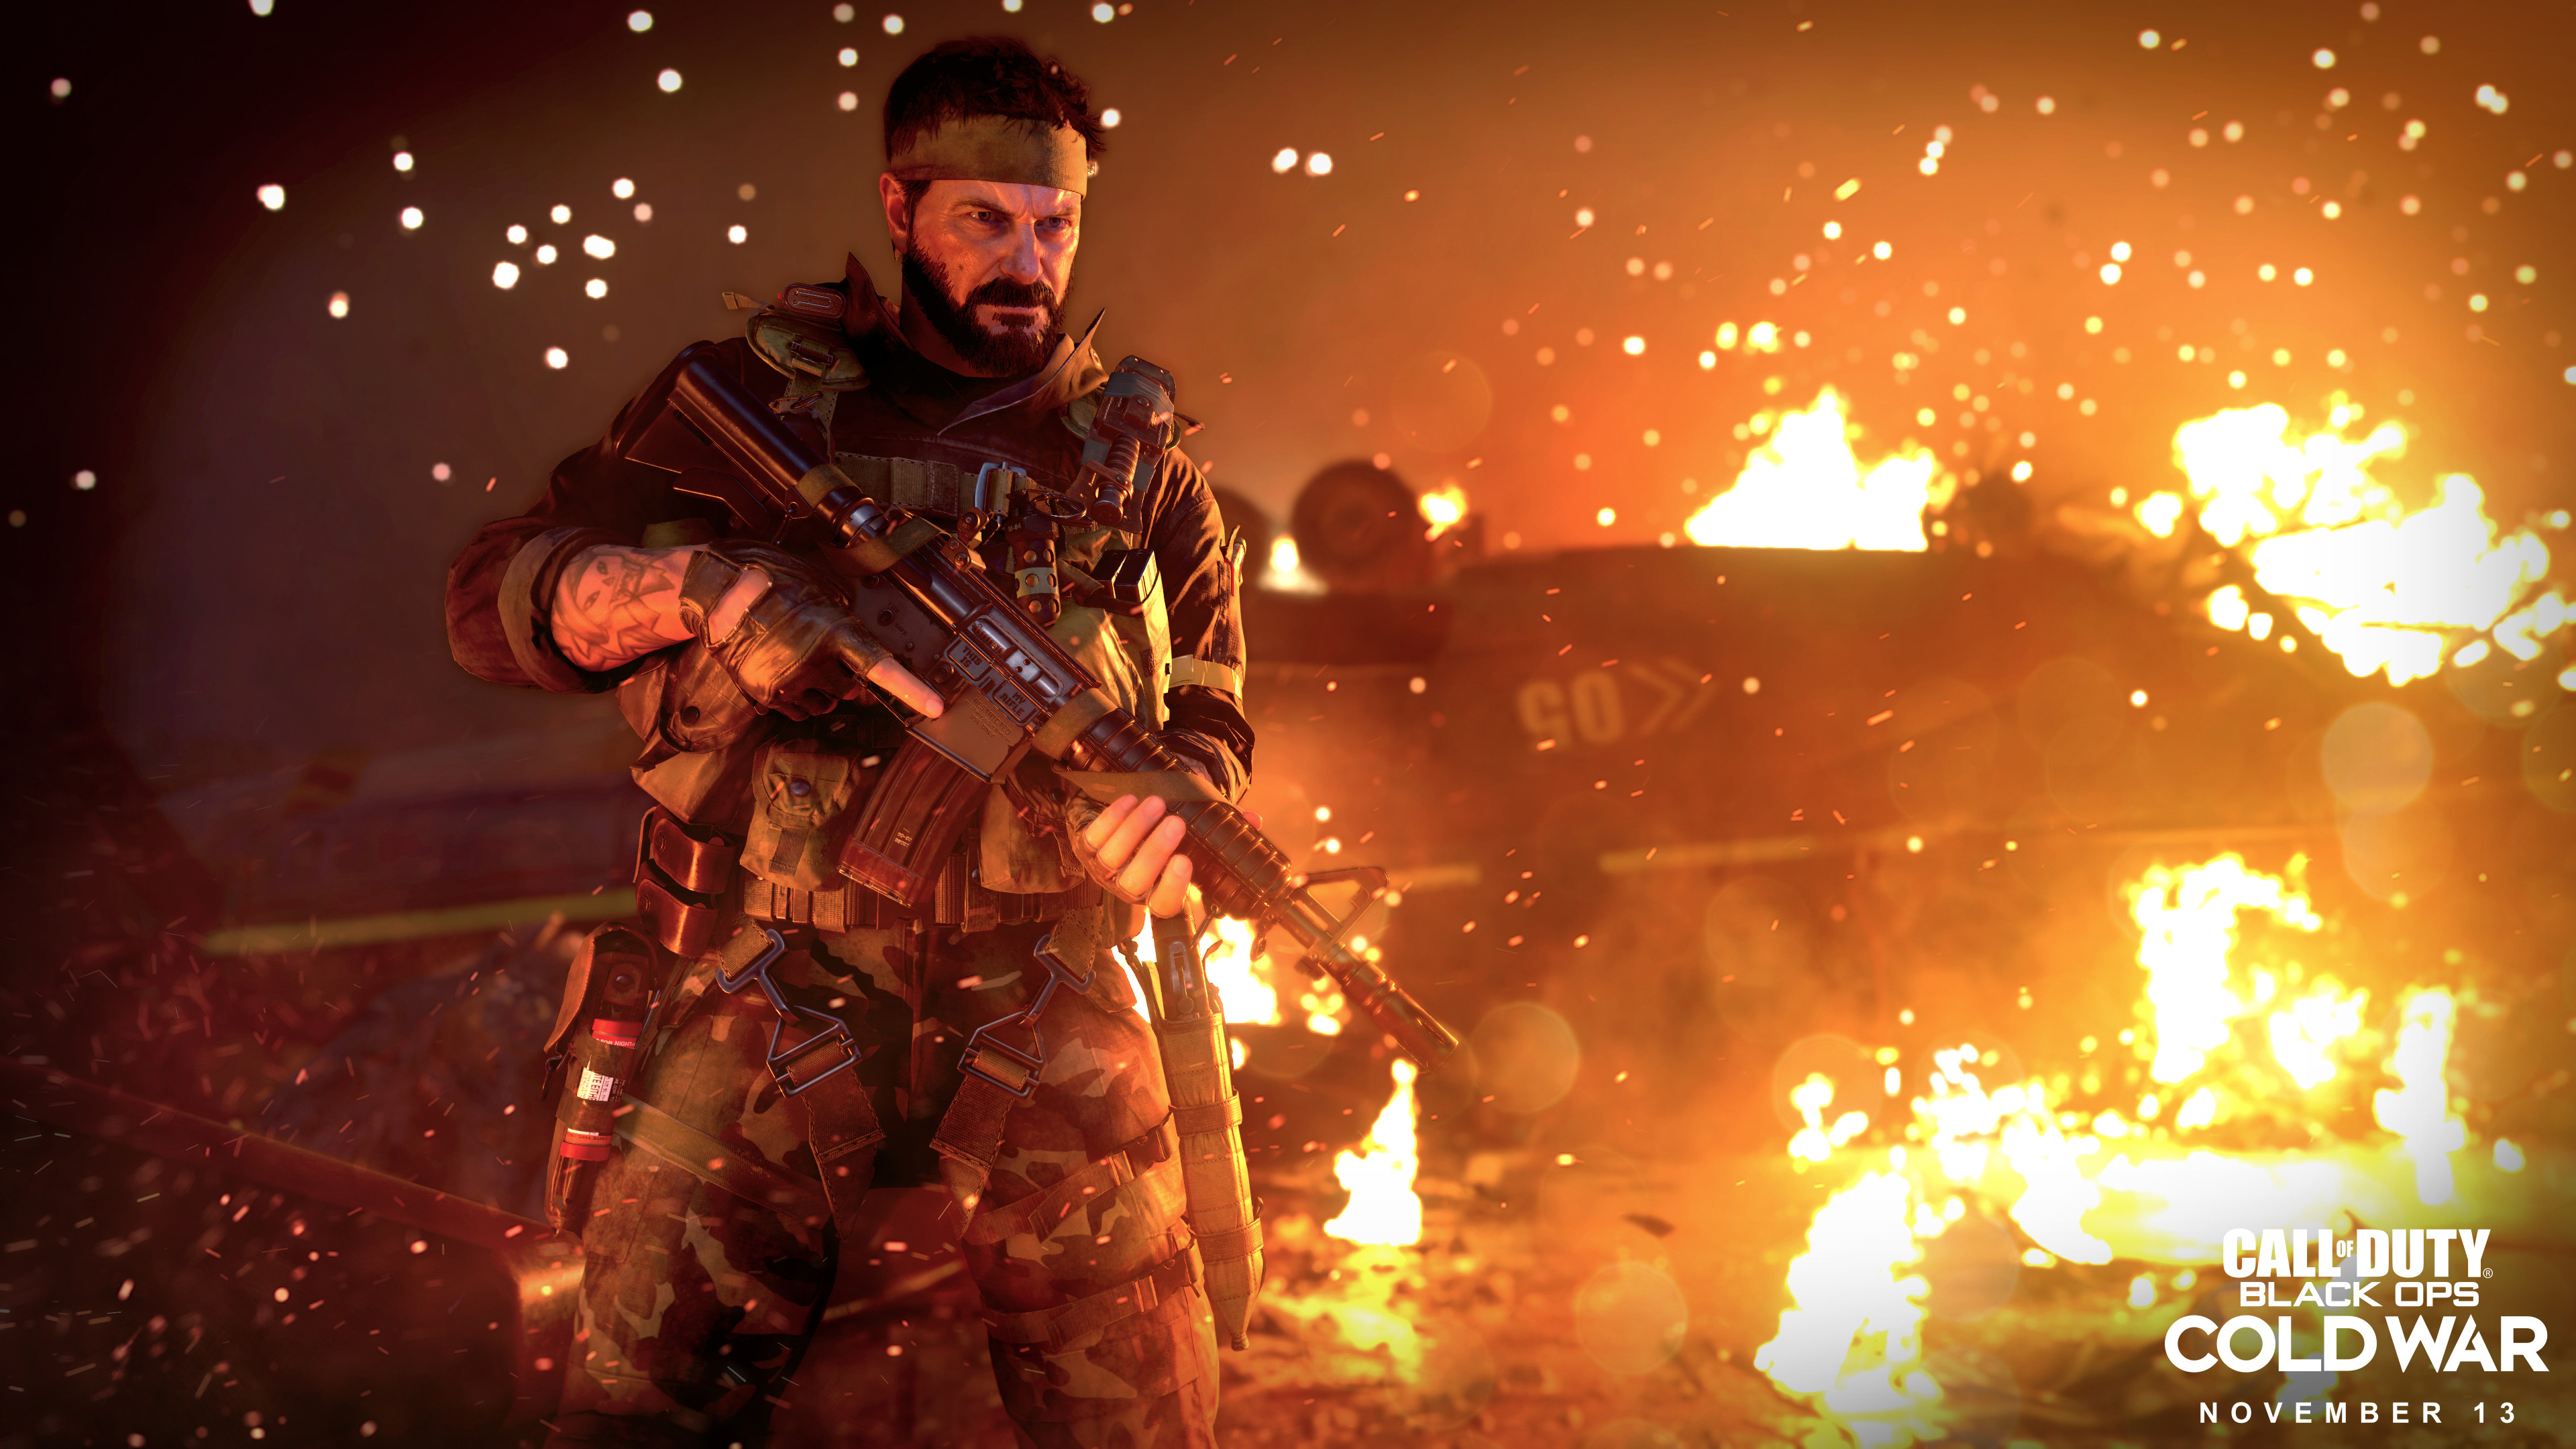 ArtStation - Call of Duty: Black Ops Cold War XM4